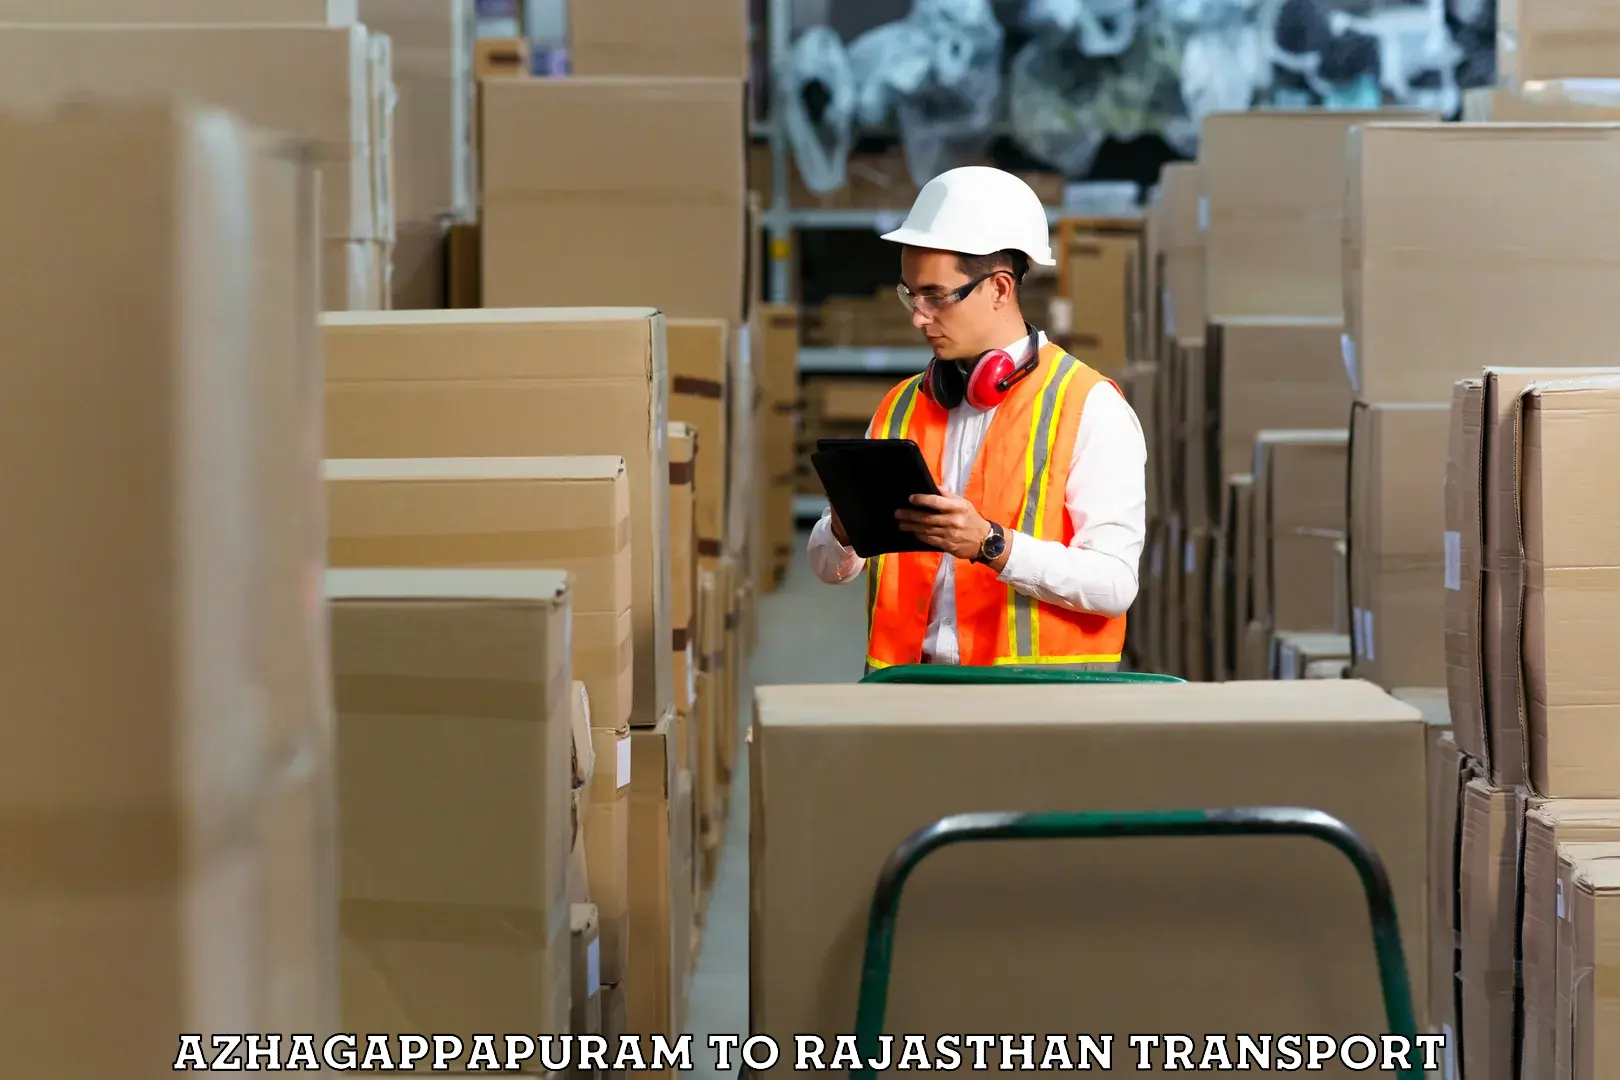 India truck logistics services Azhagappapuram to Tibbi